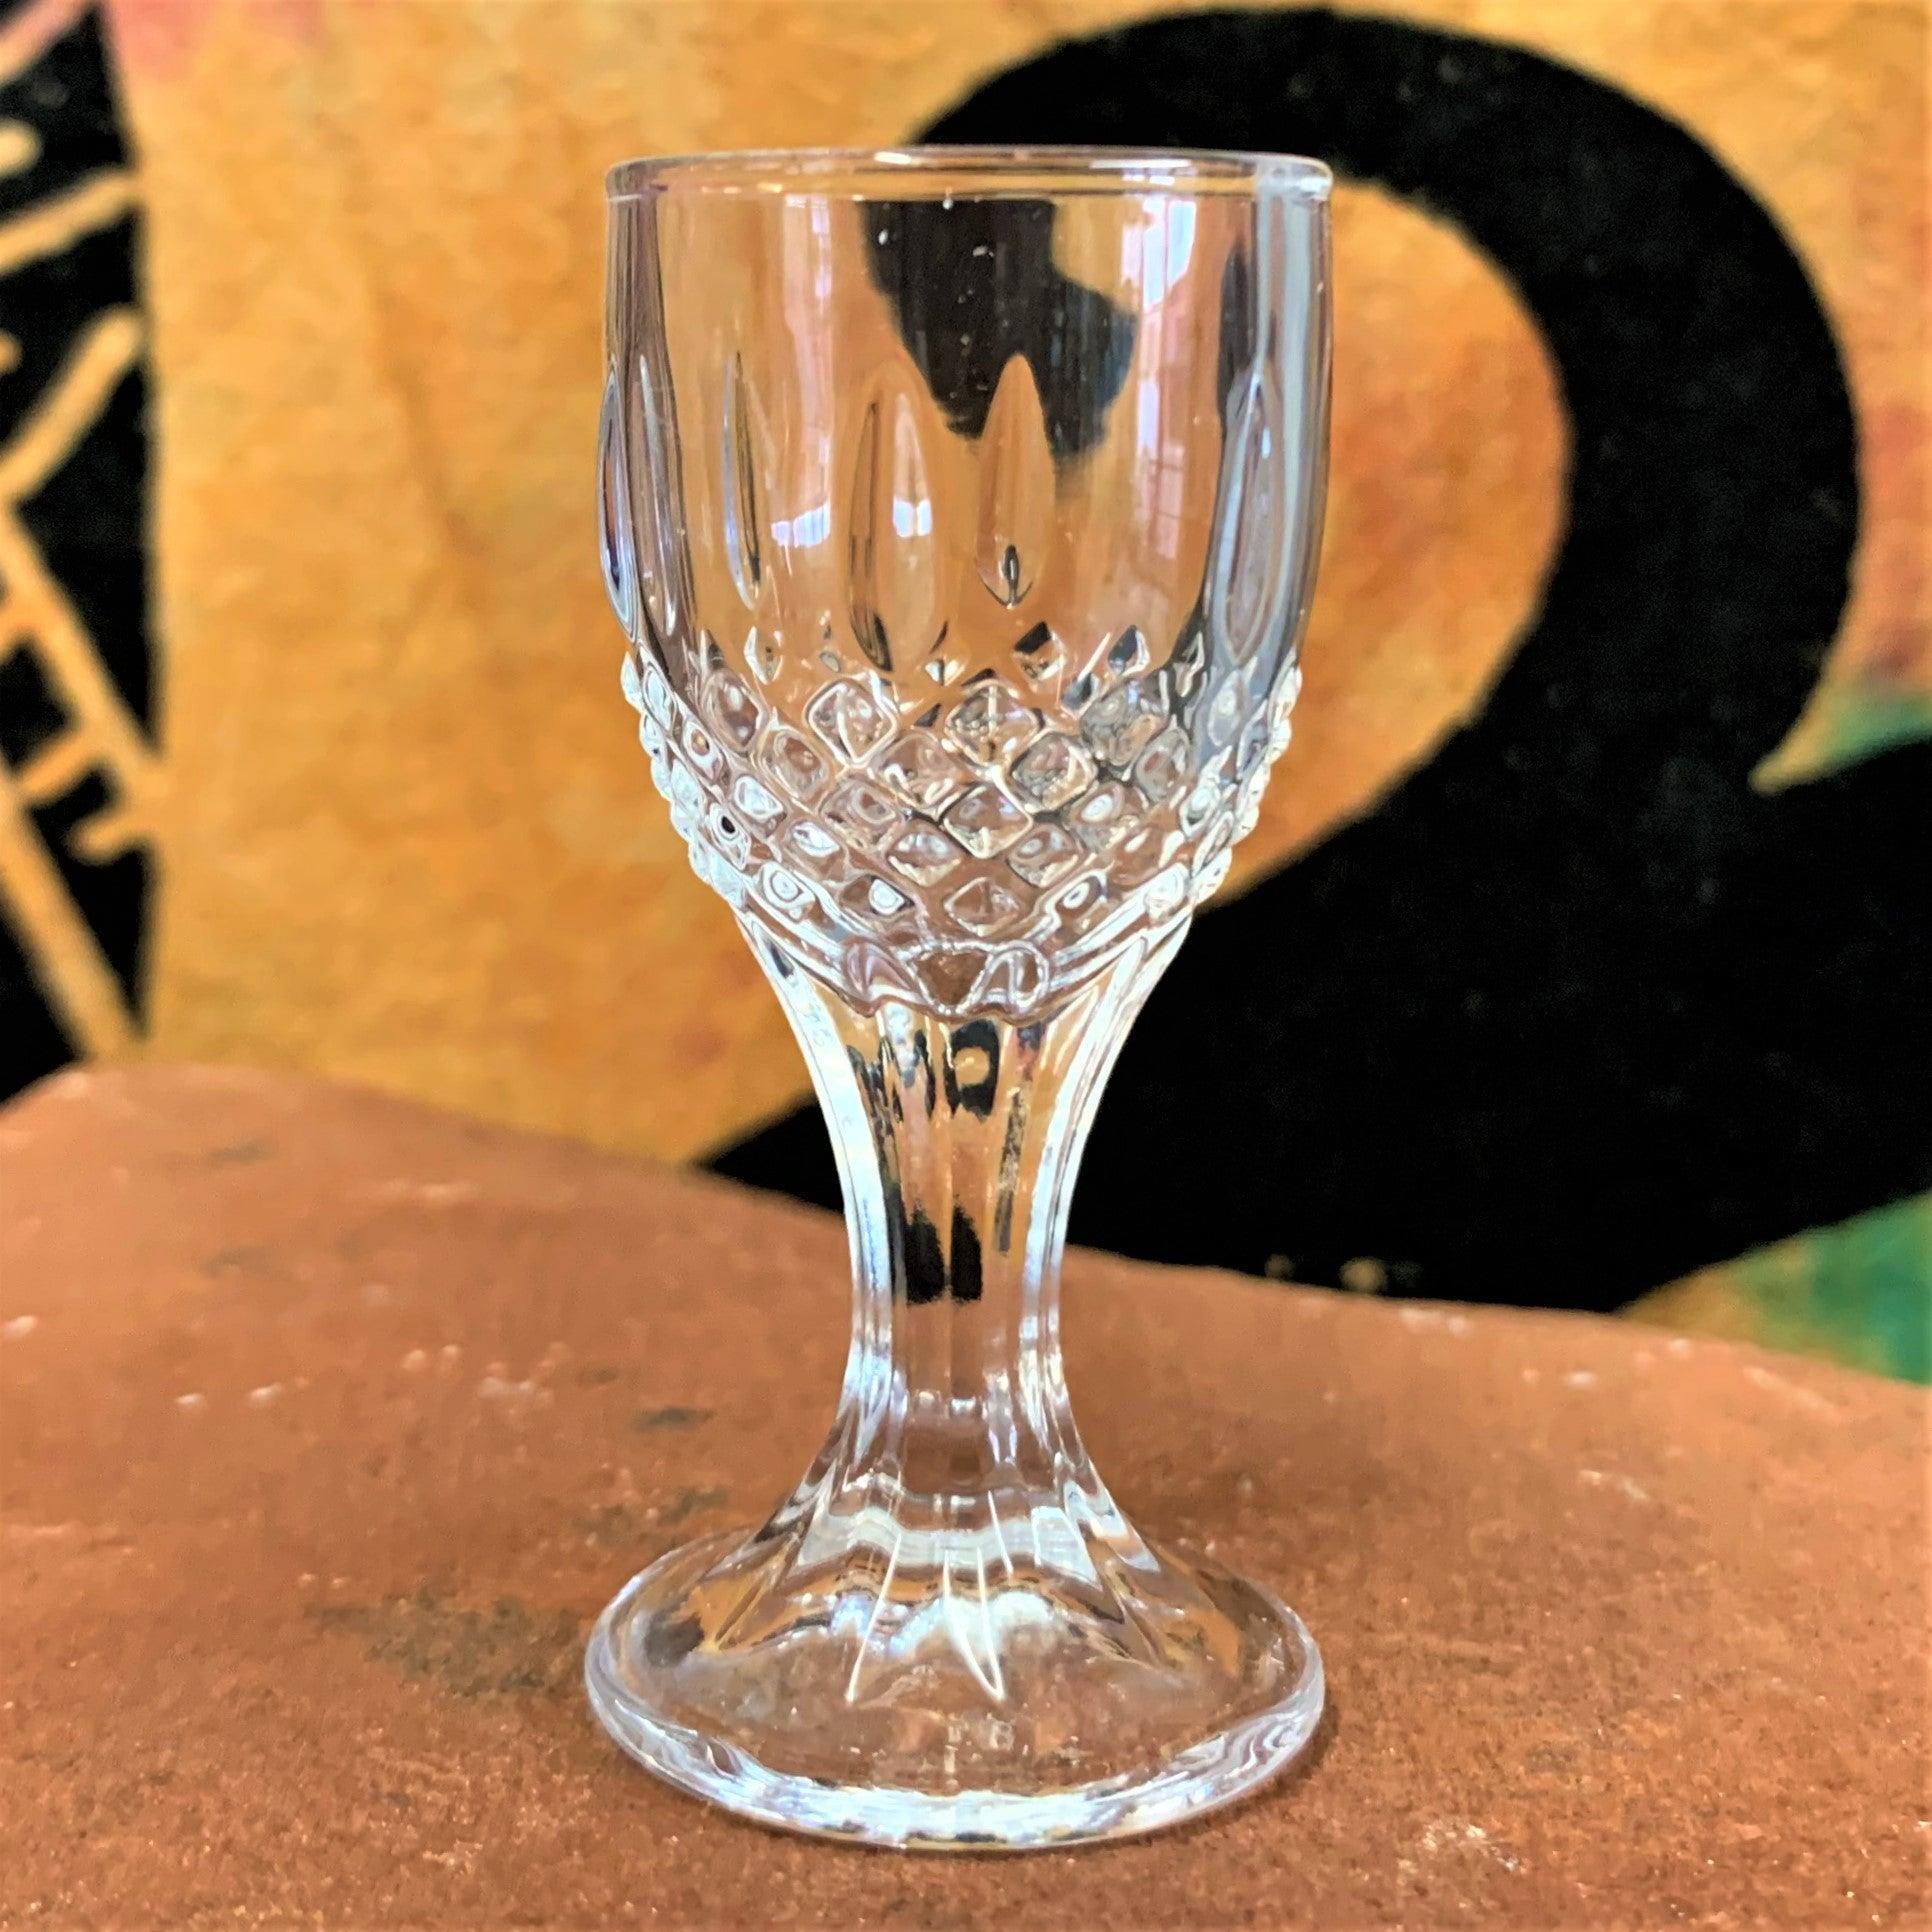 Ormus Ritual Glass with diamond details